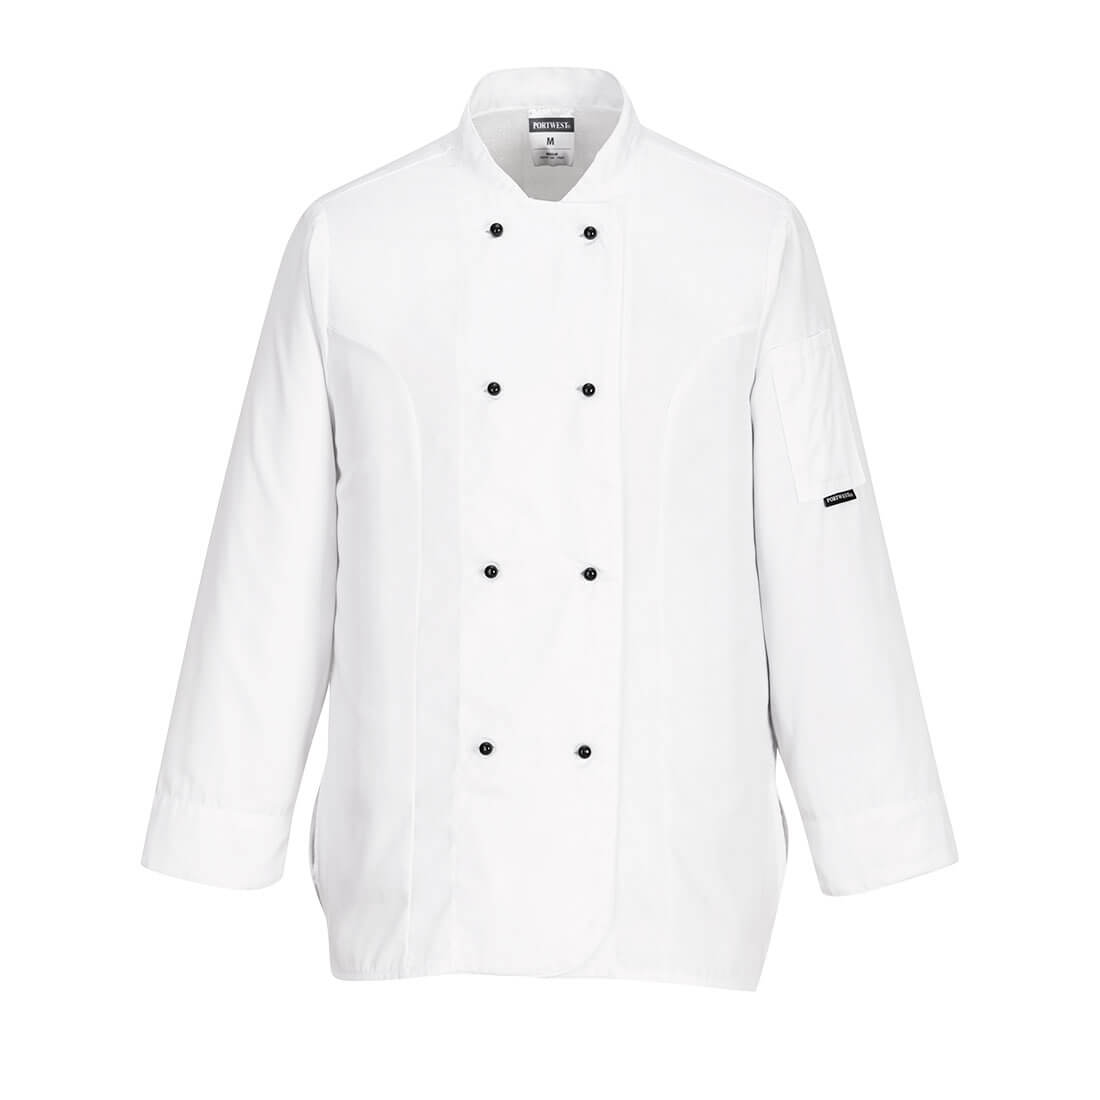 Rachel Women's Chefs Jacket L/S - White